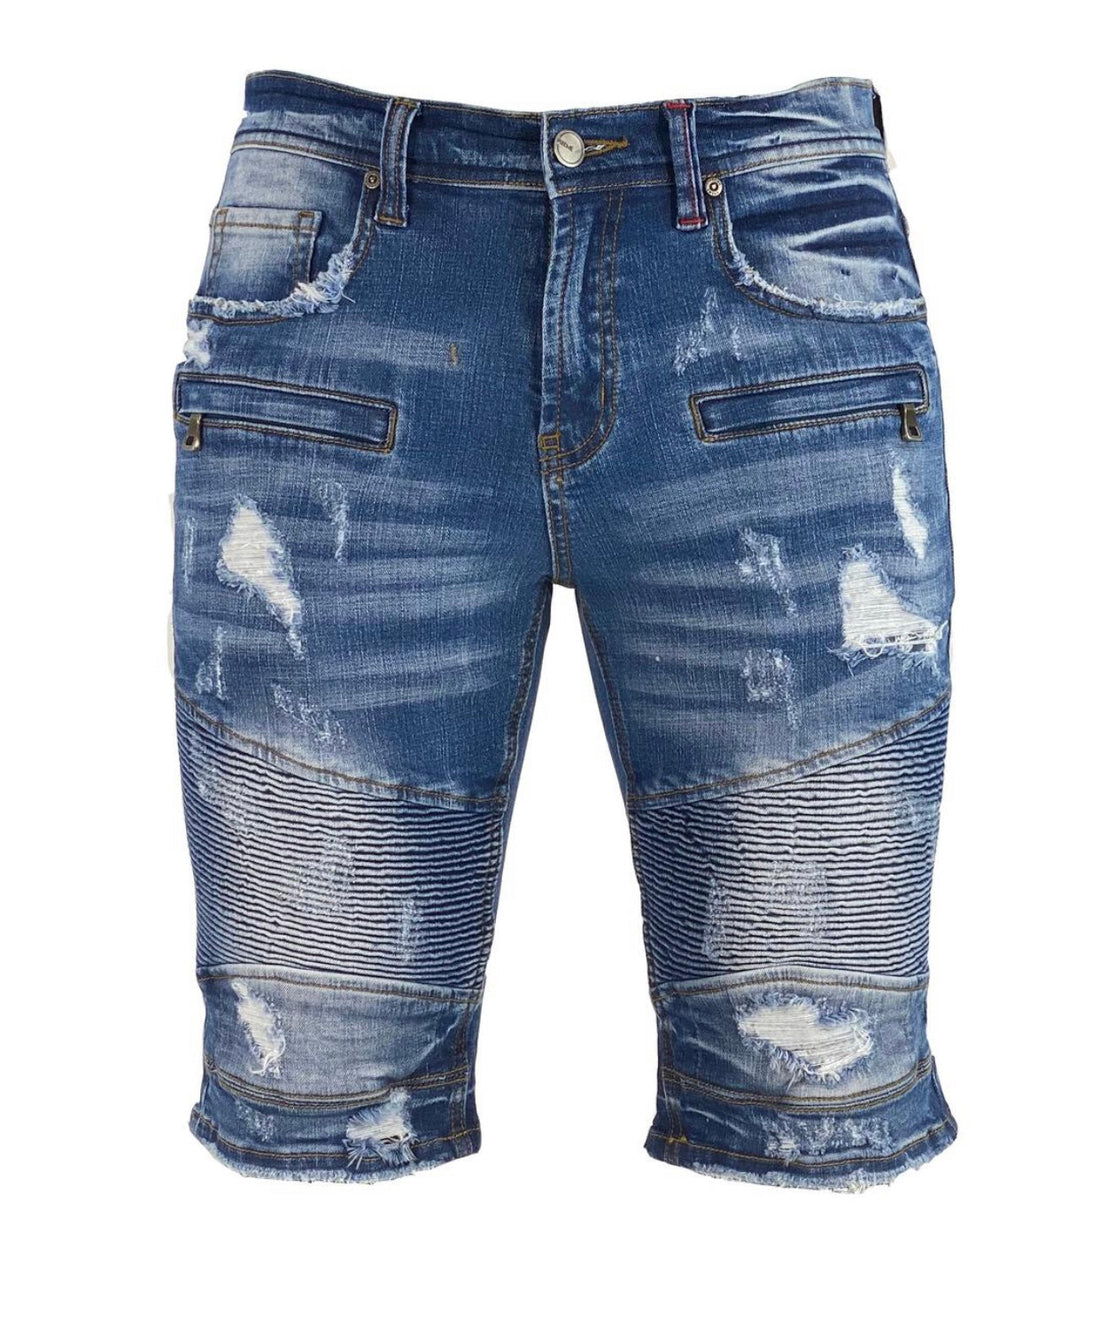 Preme Indigo Blue Denim Shorts (743)